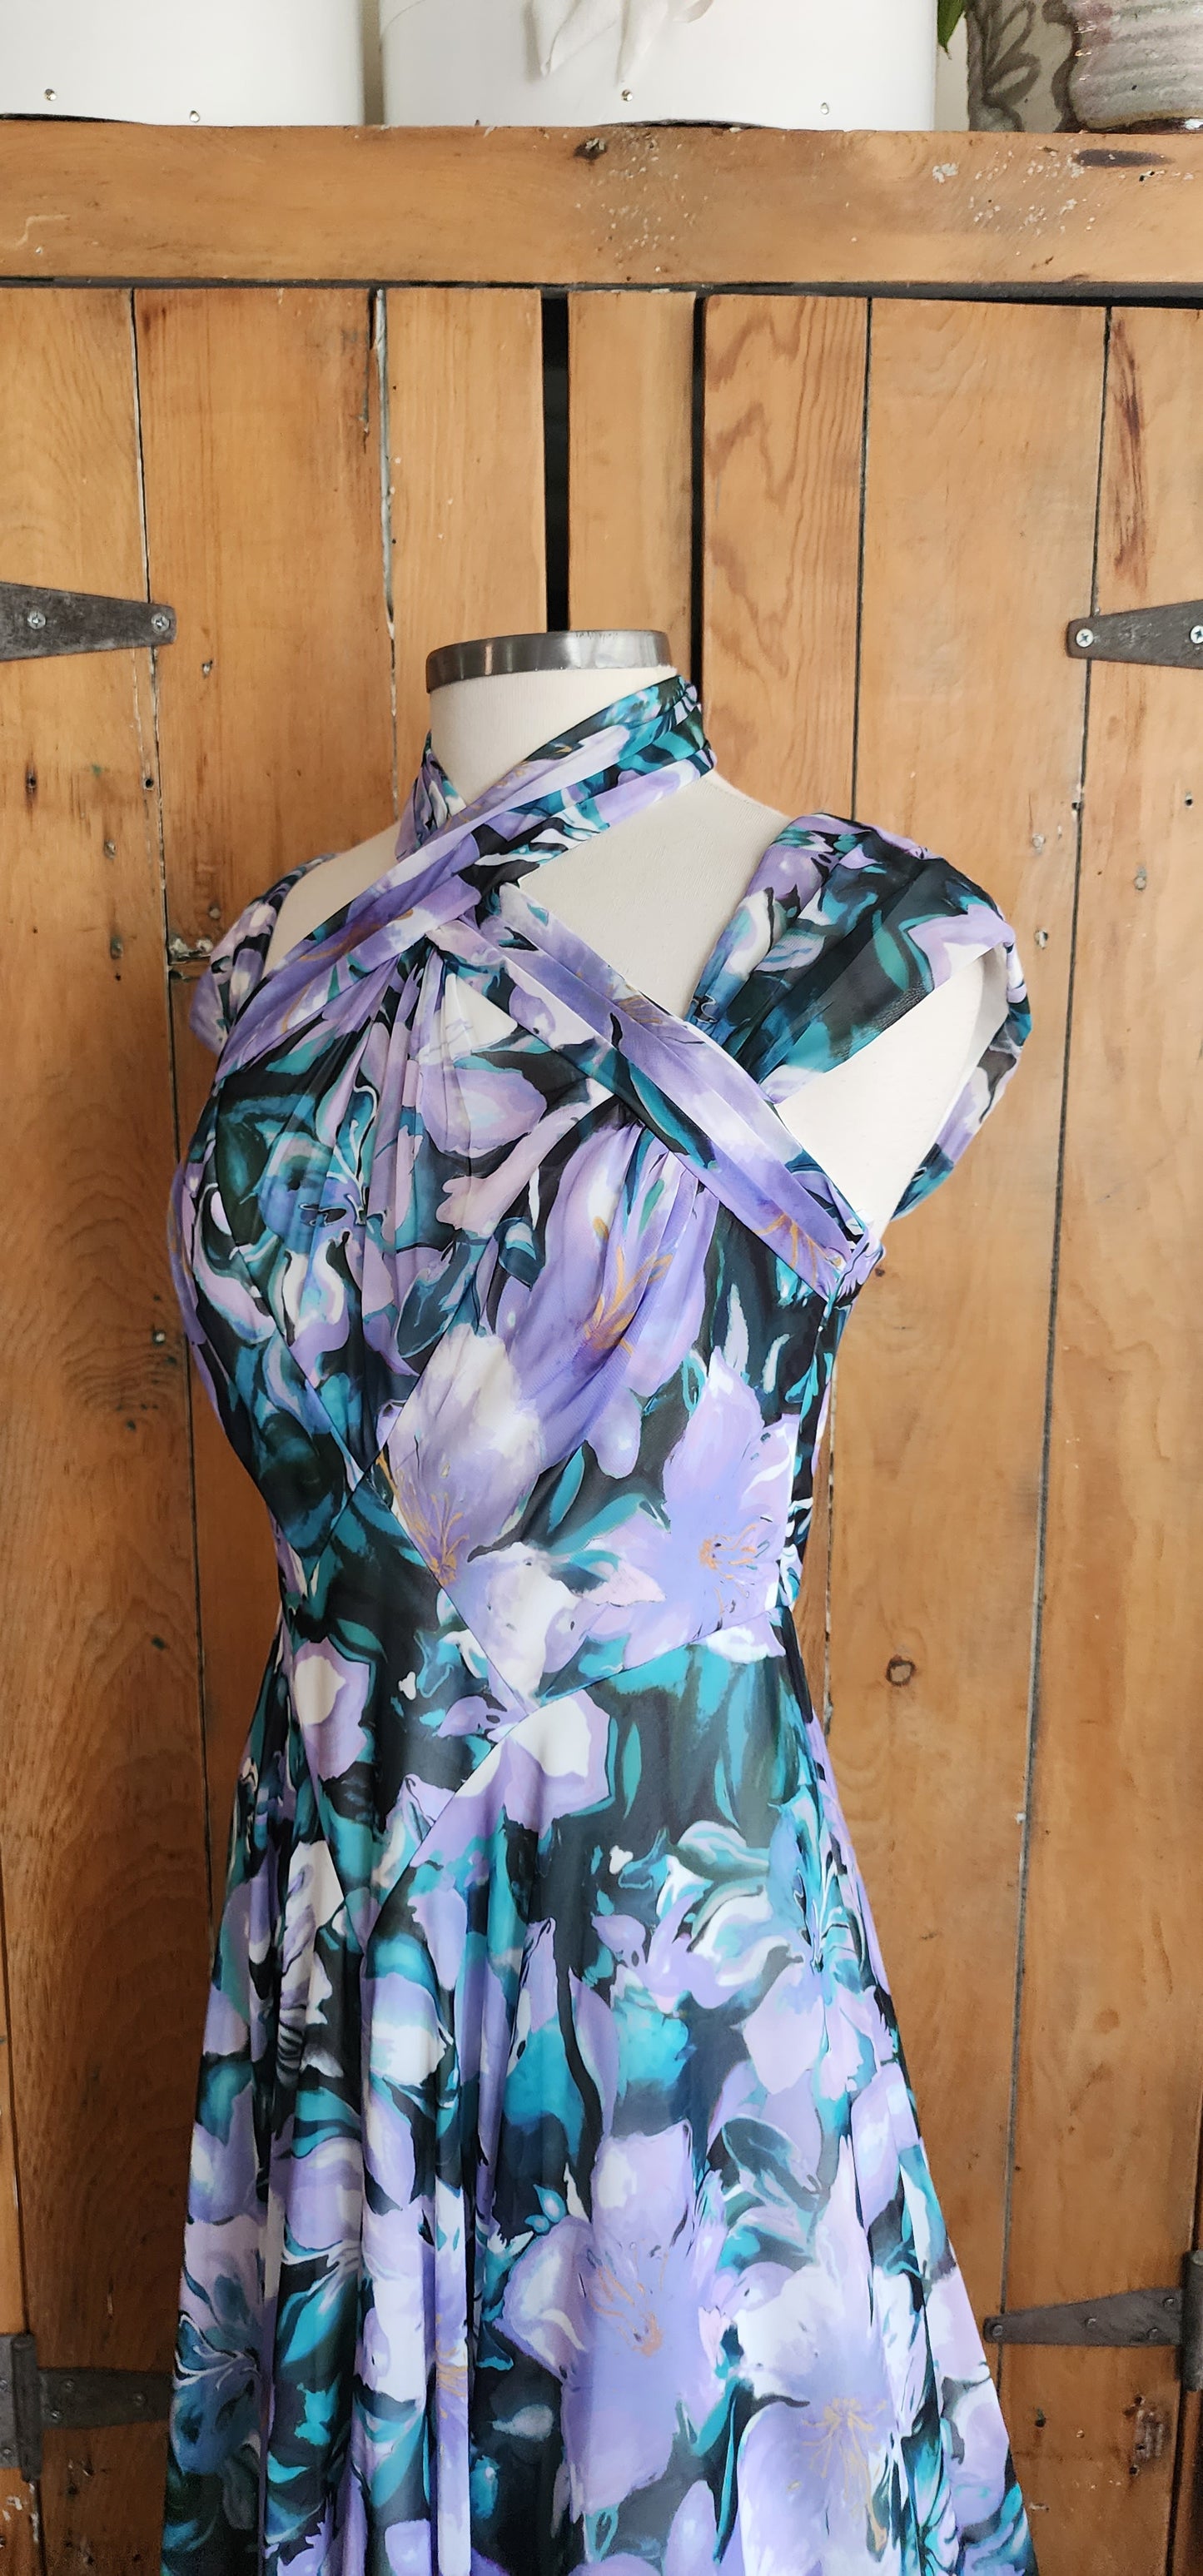 Tadashi Shoji Dress Lilac Floral Print Halter Top Asymmetrical Top